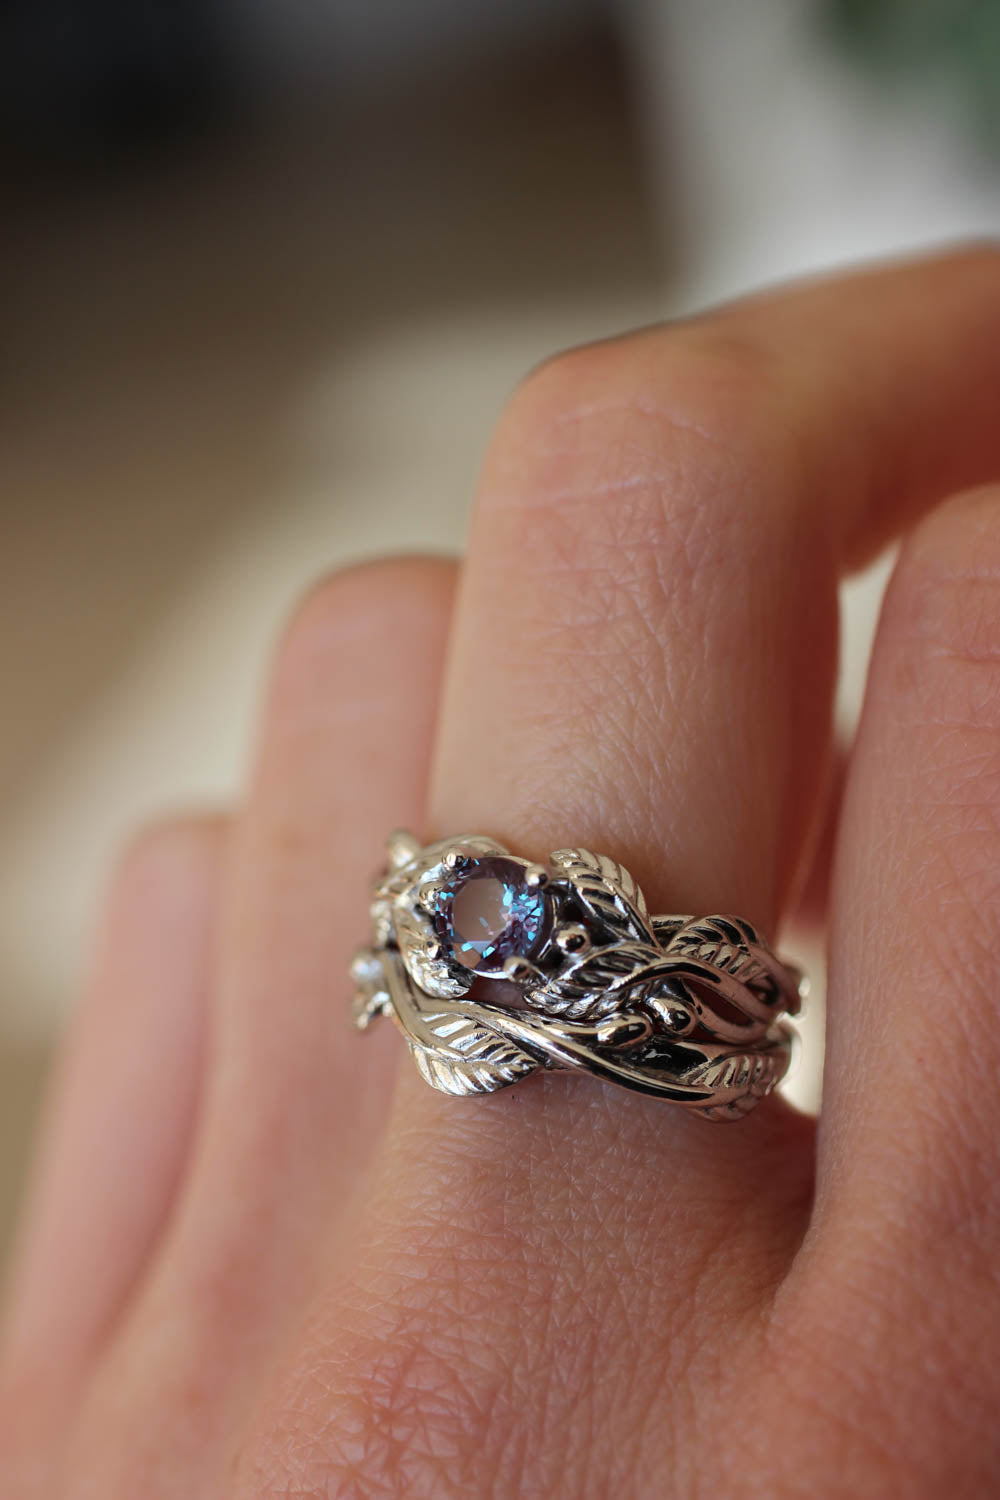 Lab alexandrite engagement ring, white gold nature themed promise ring / Cornus - Eden Garden Jewelry™